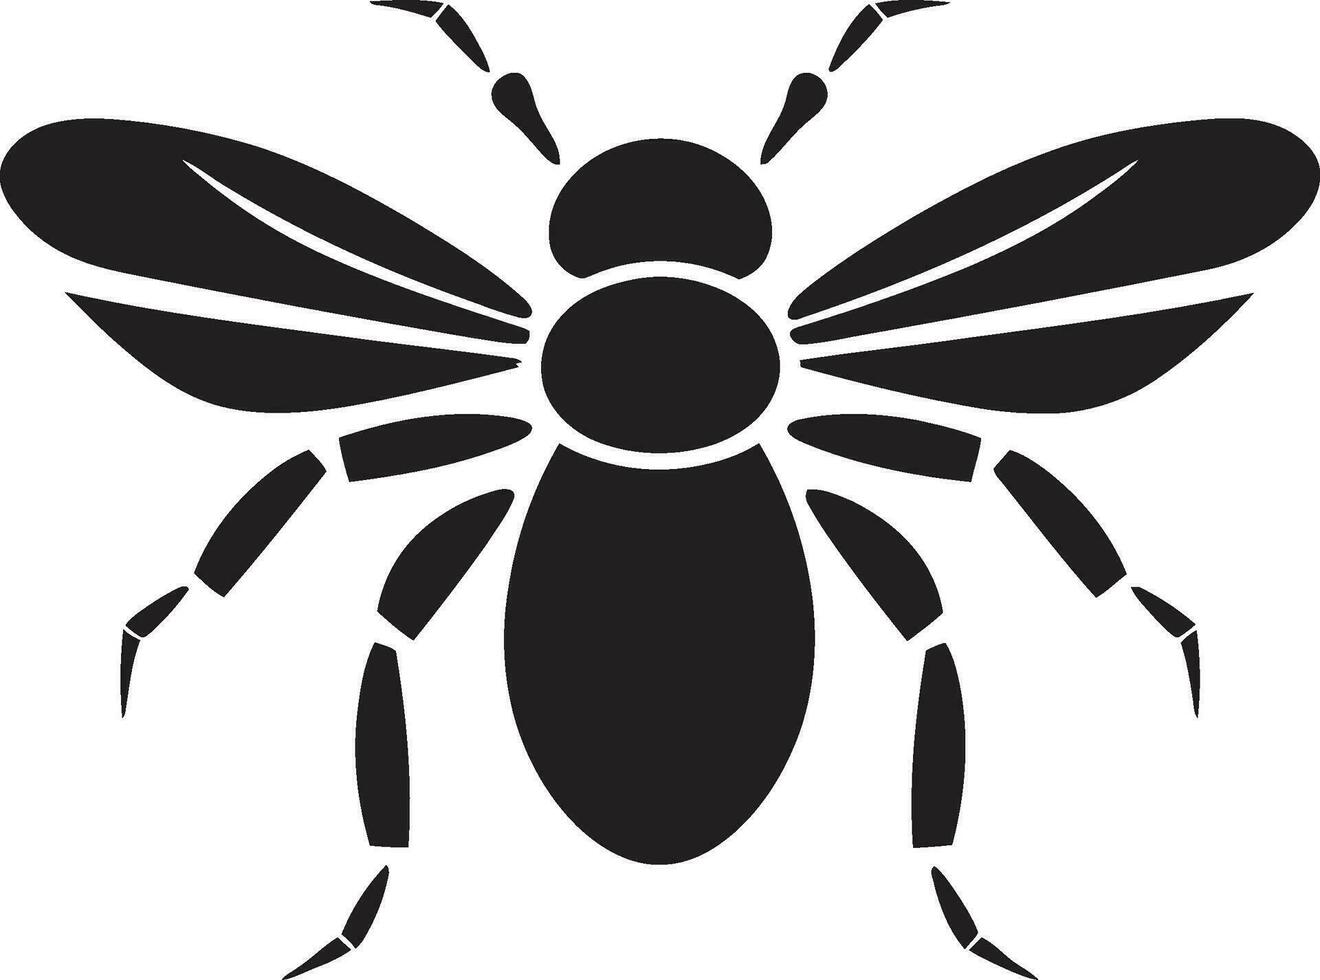 enkelhet talar volymer svart vektor myra design elegant i svart vektor konst myra logotyp